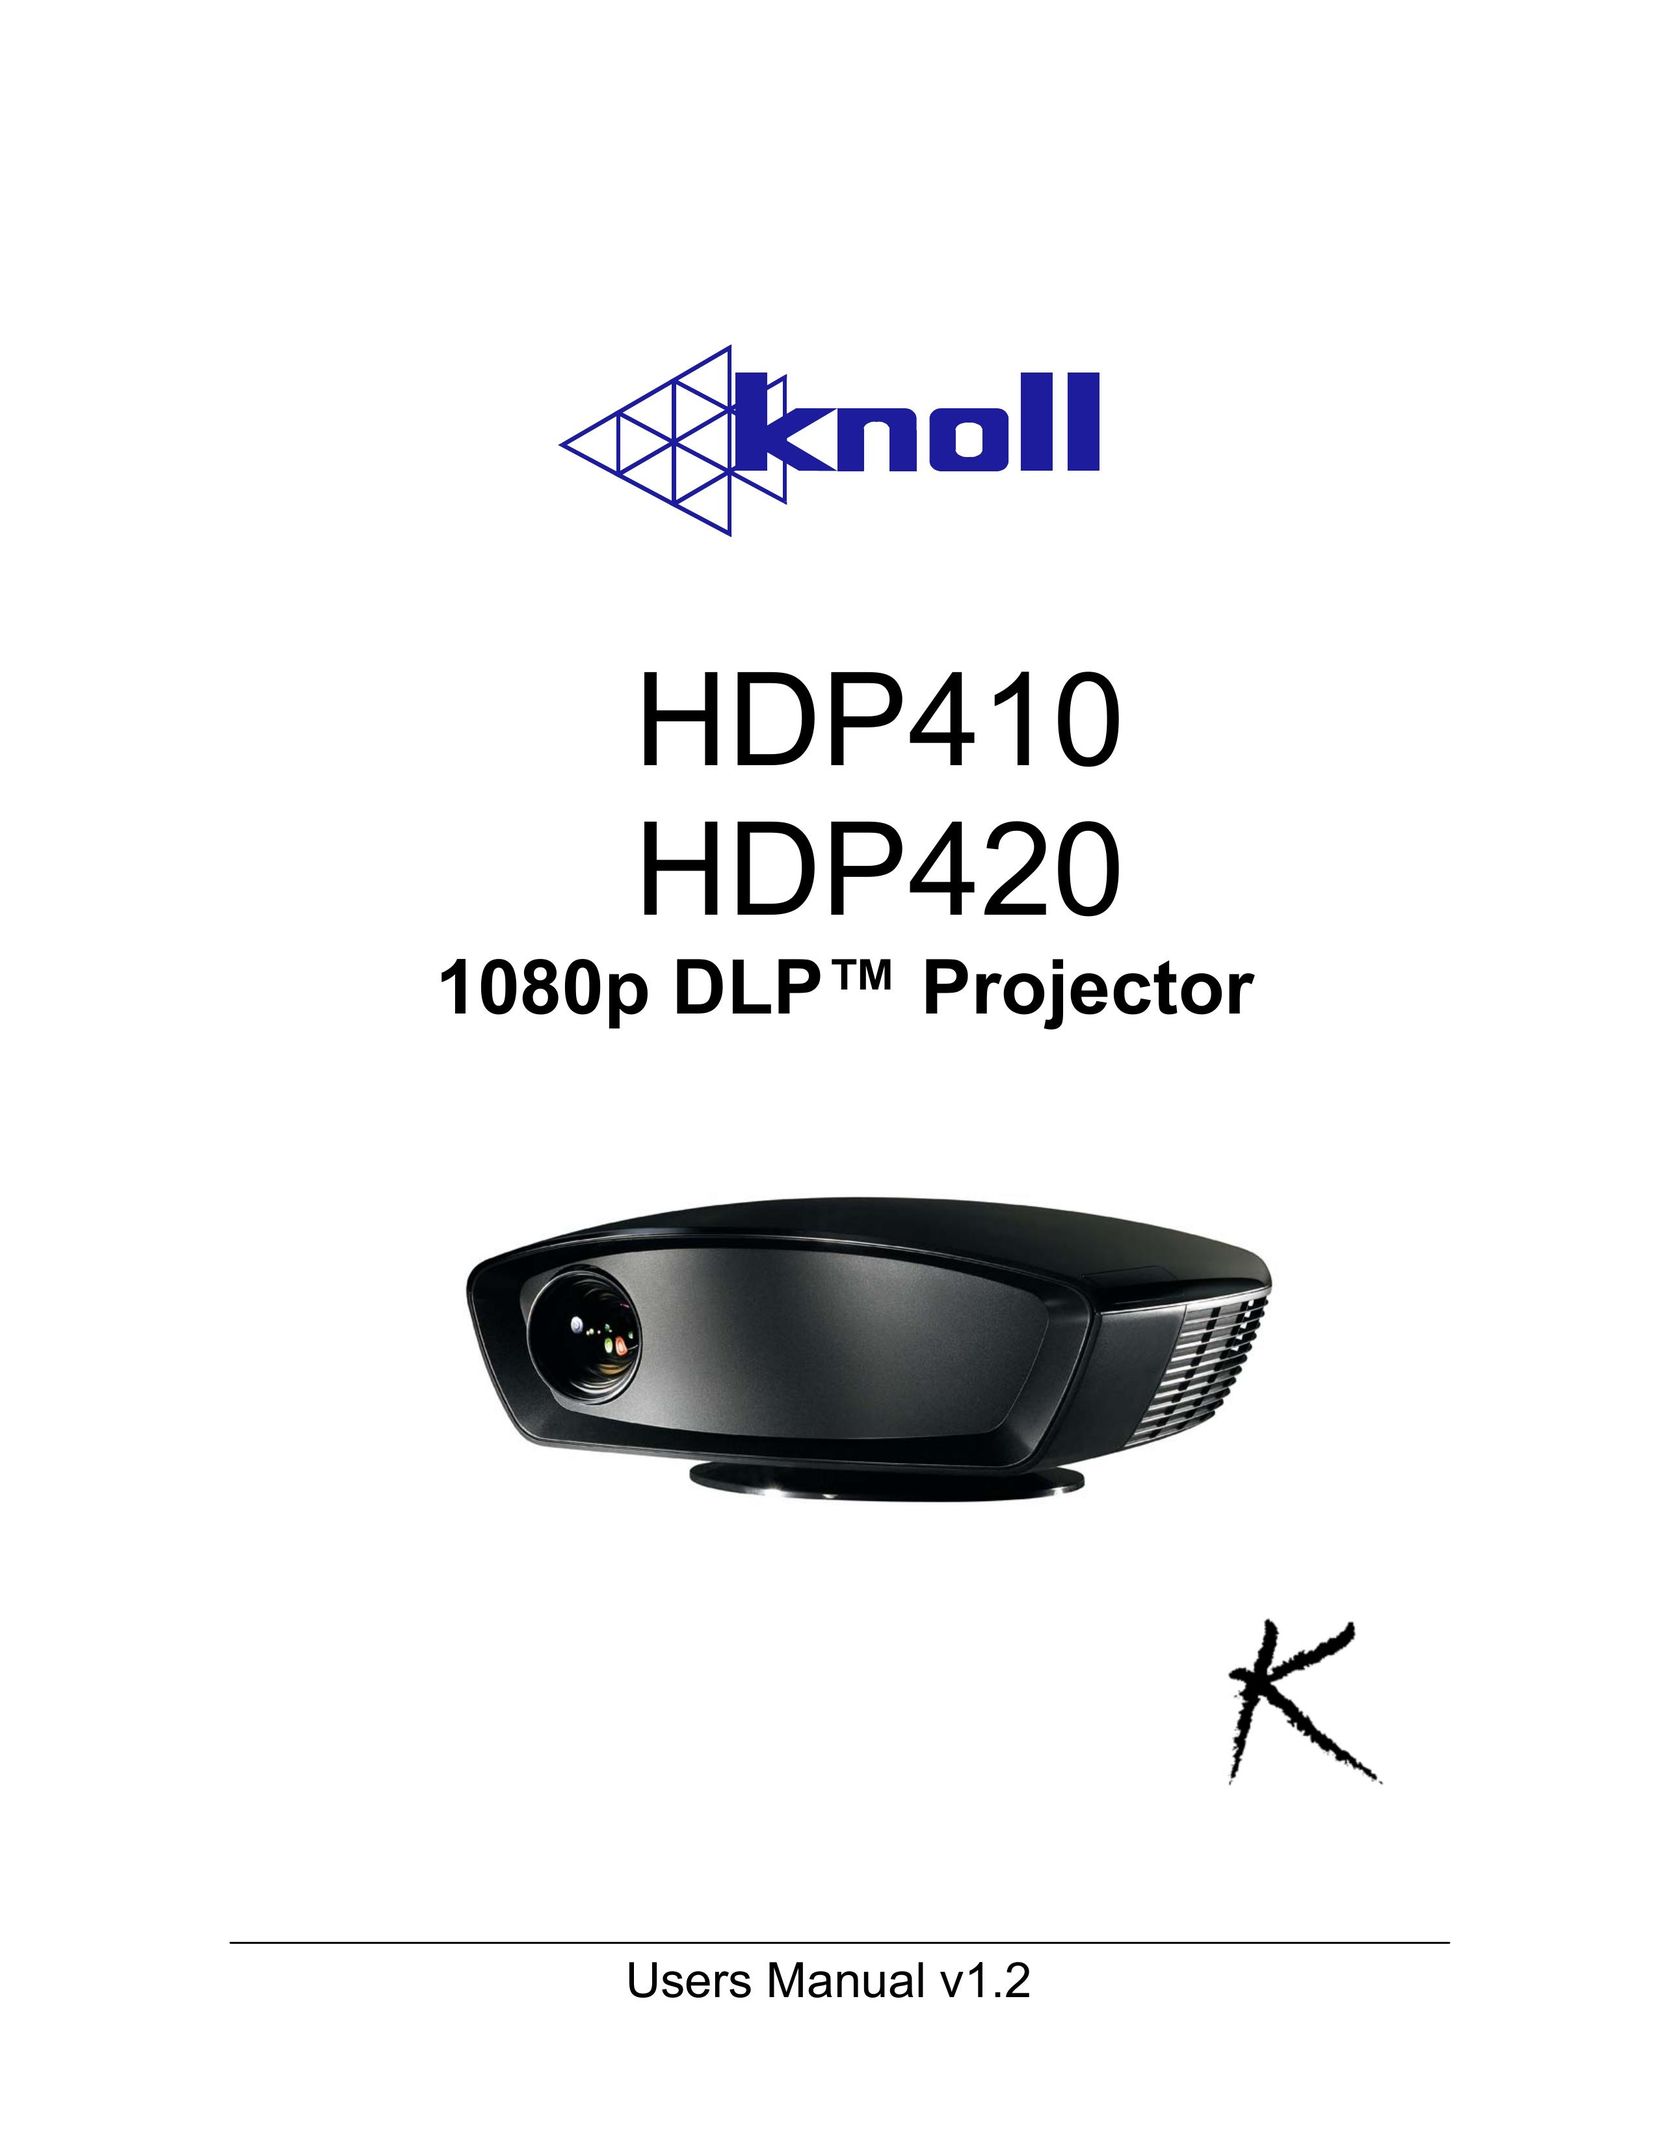 Knoll HDP420 Projector User Manual